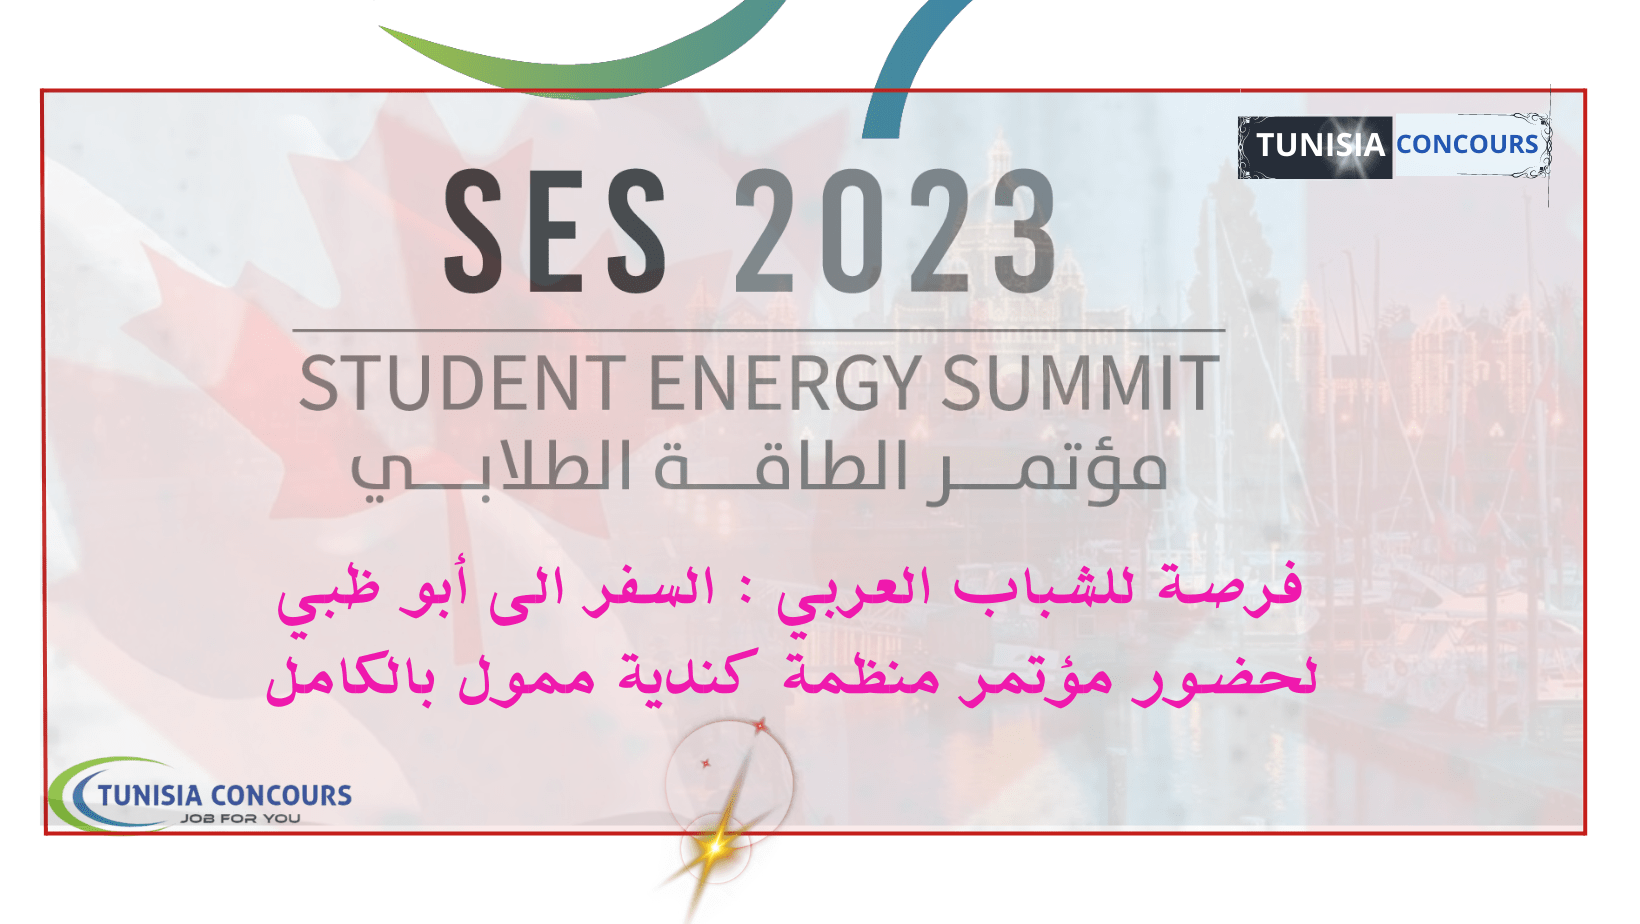 Student Energy Summit 2023